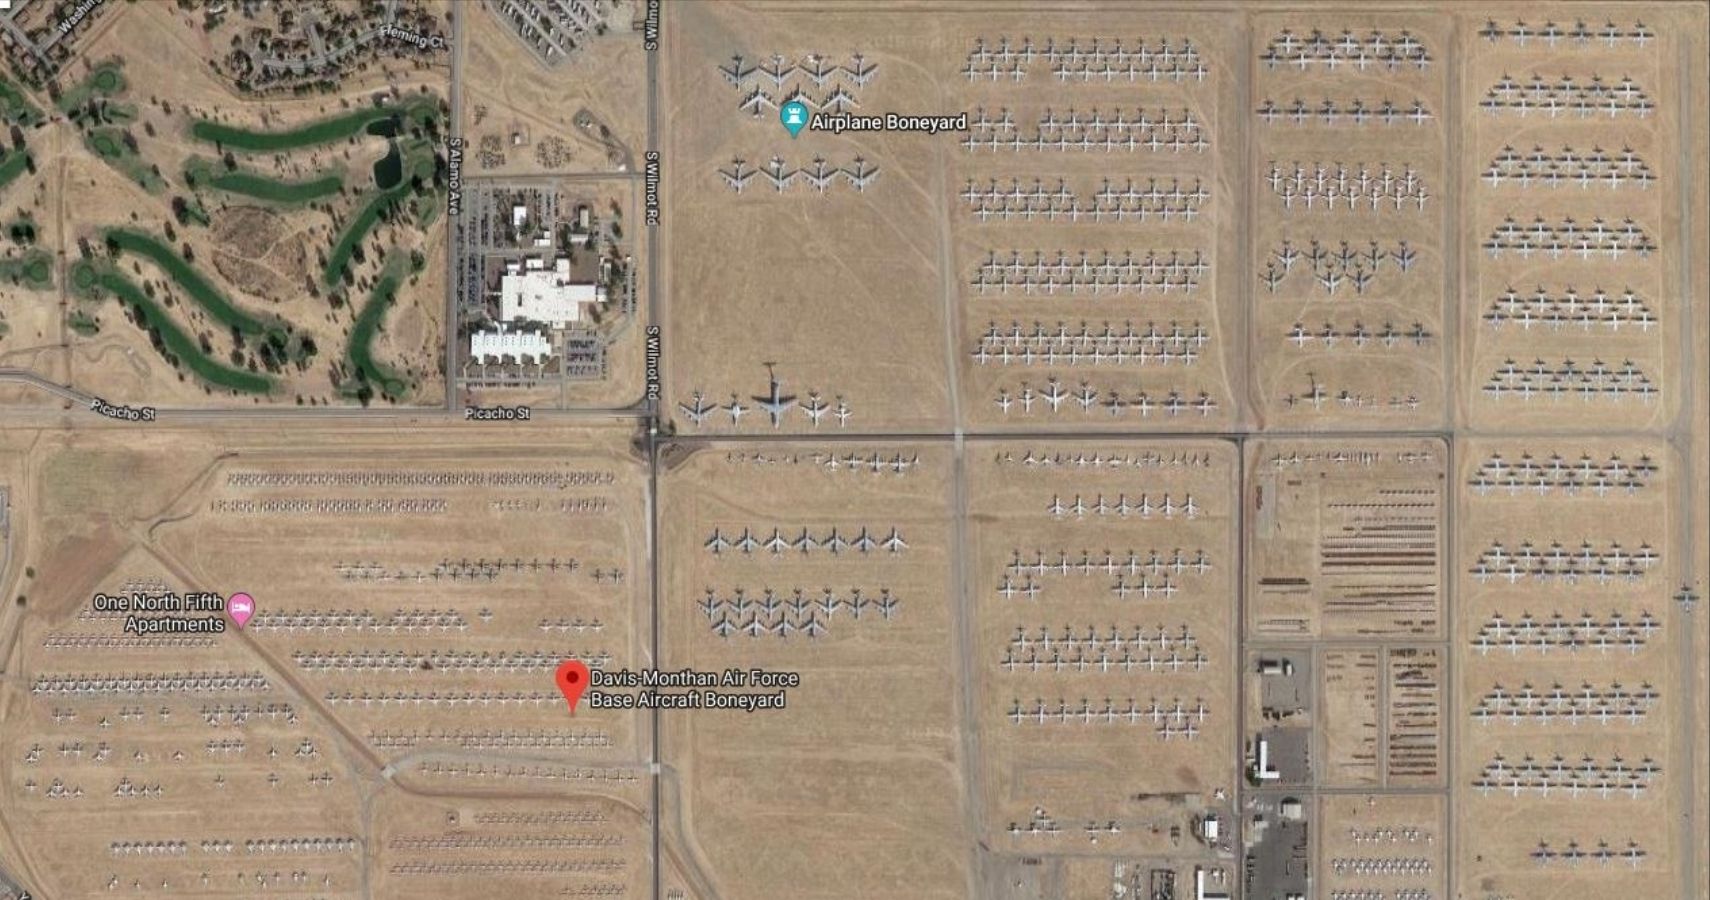 Google Maps Airplane Graveyard